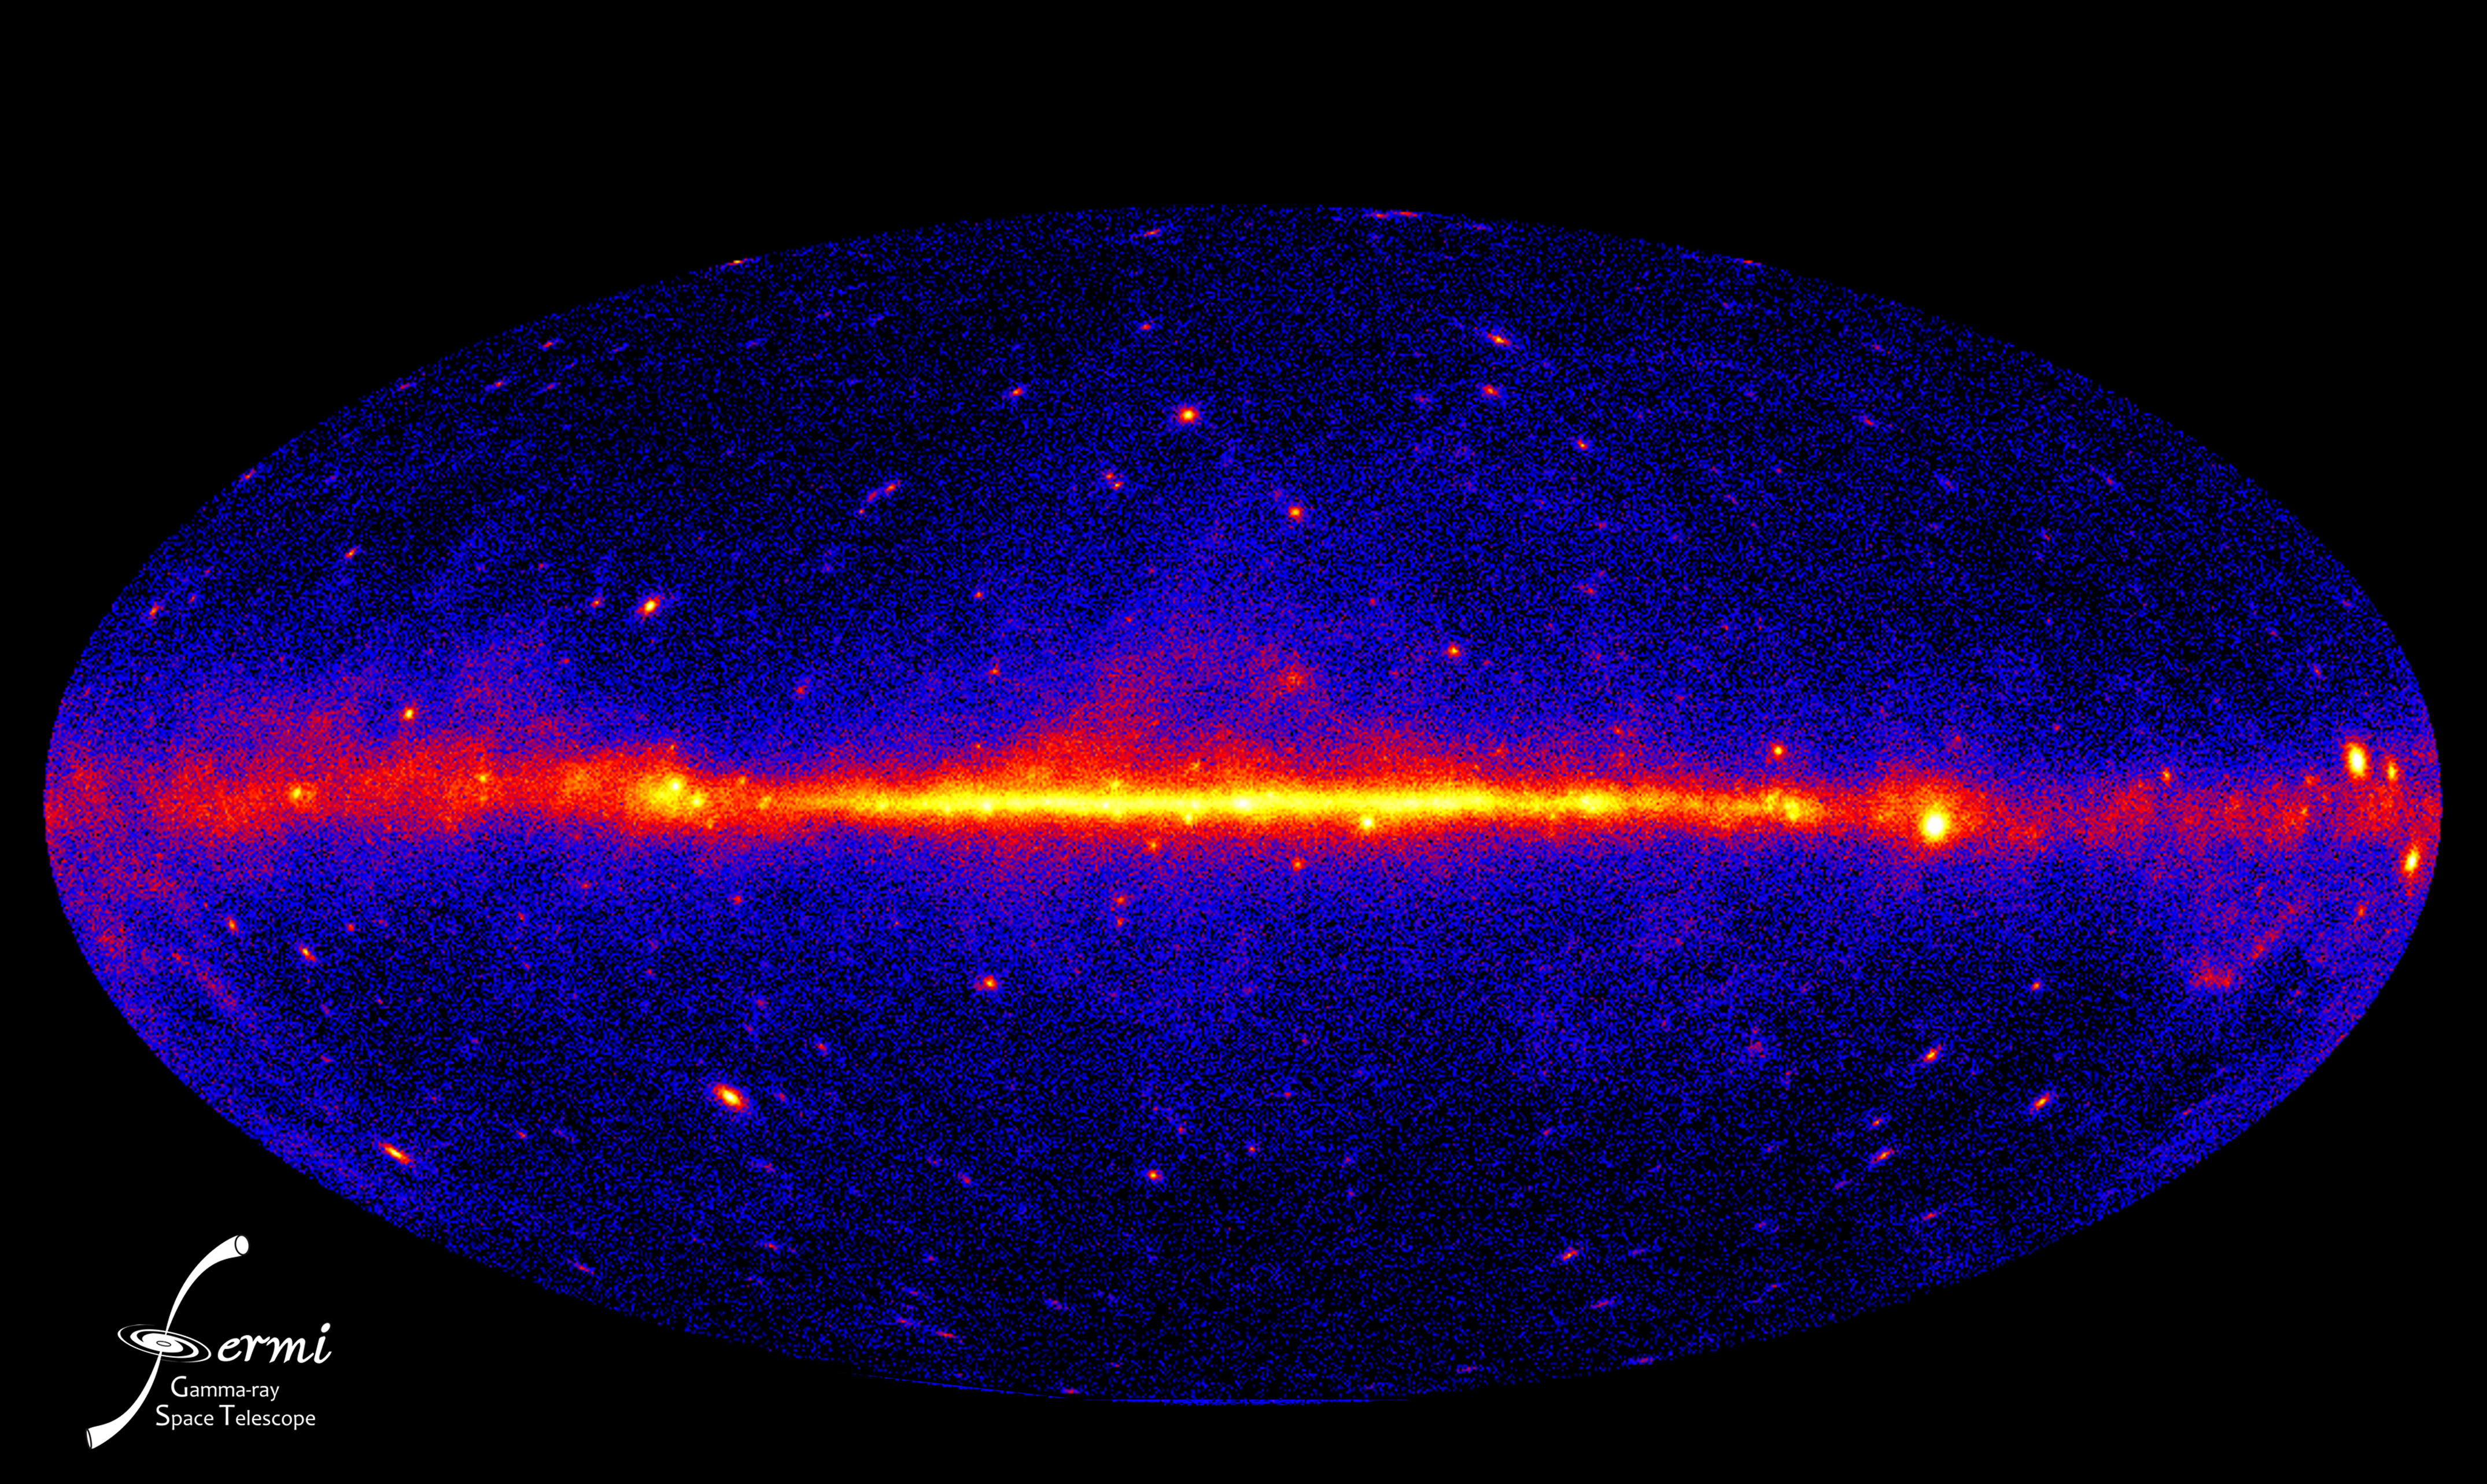 Fermi Gamma-Ray Sky